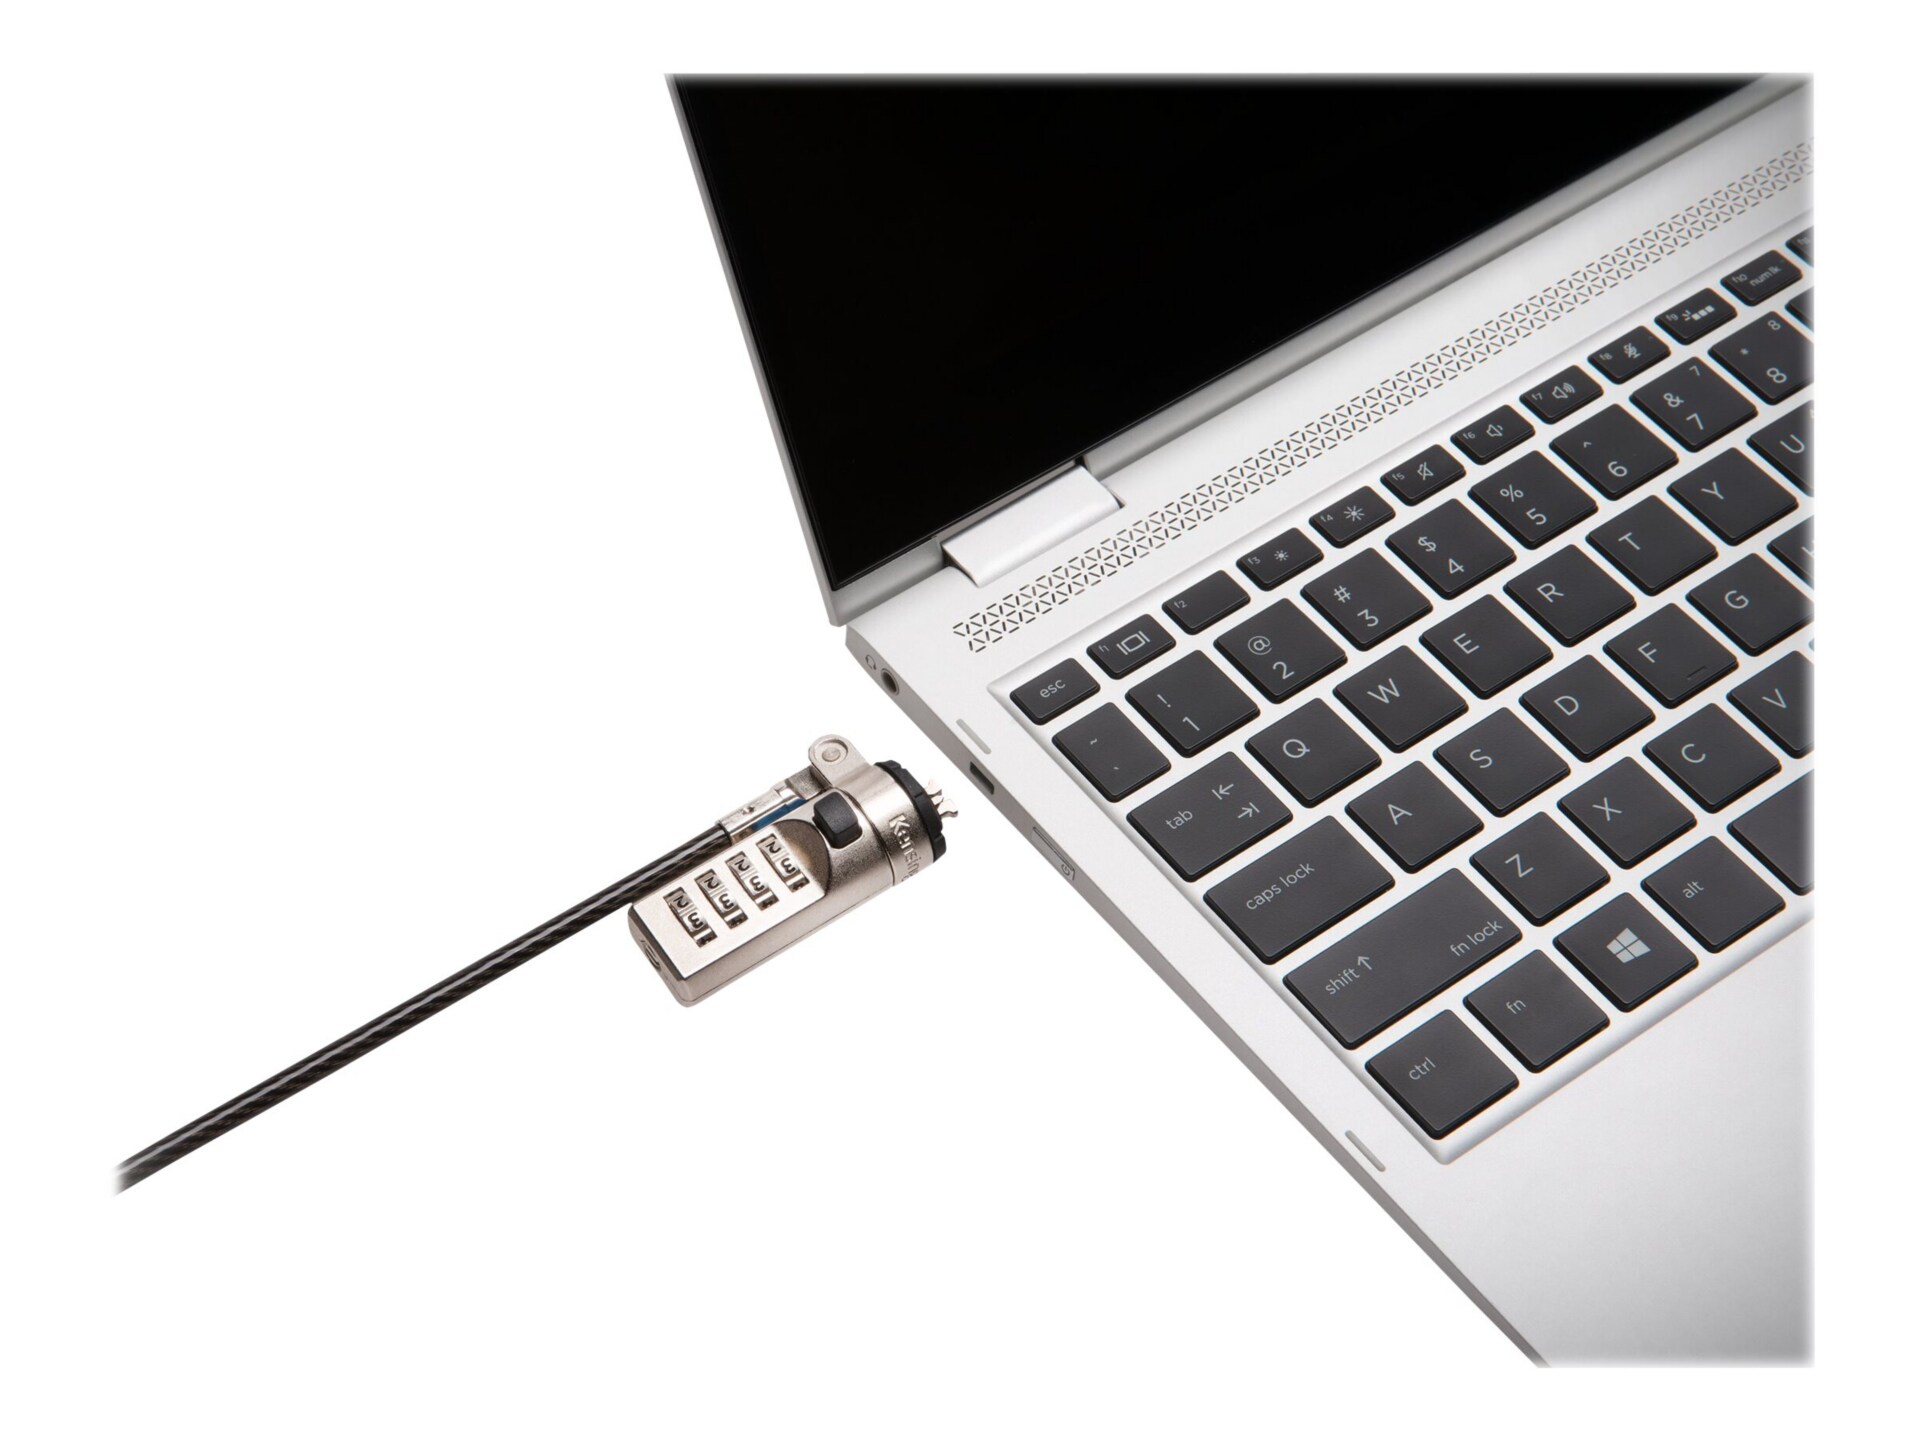 Kensington NanoSaver Serialized Combination Laptop Lock - security cable lock